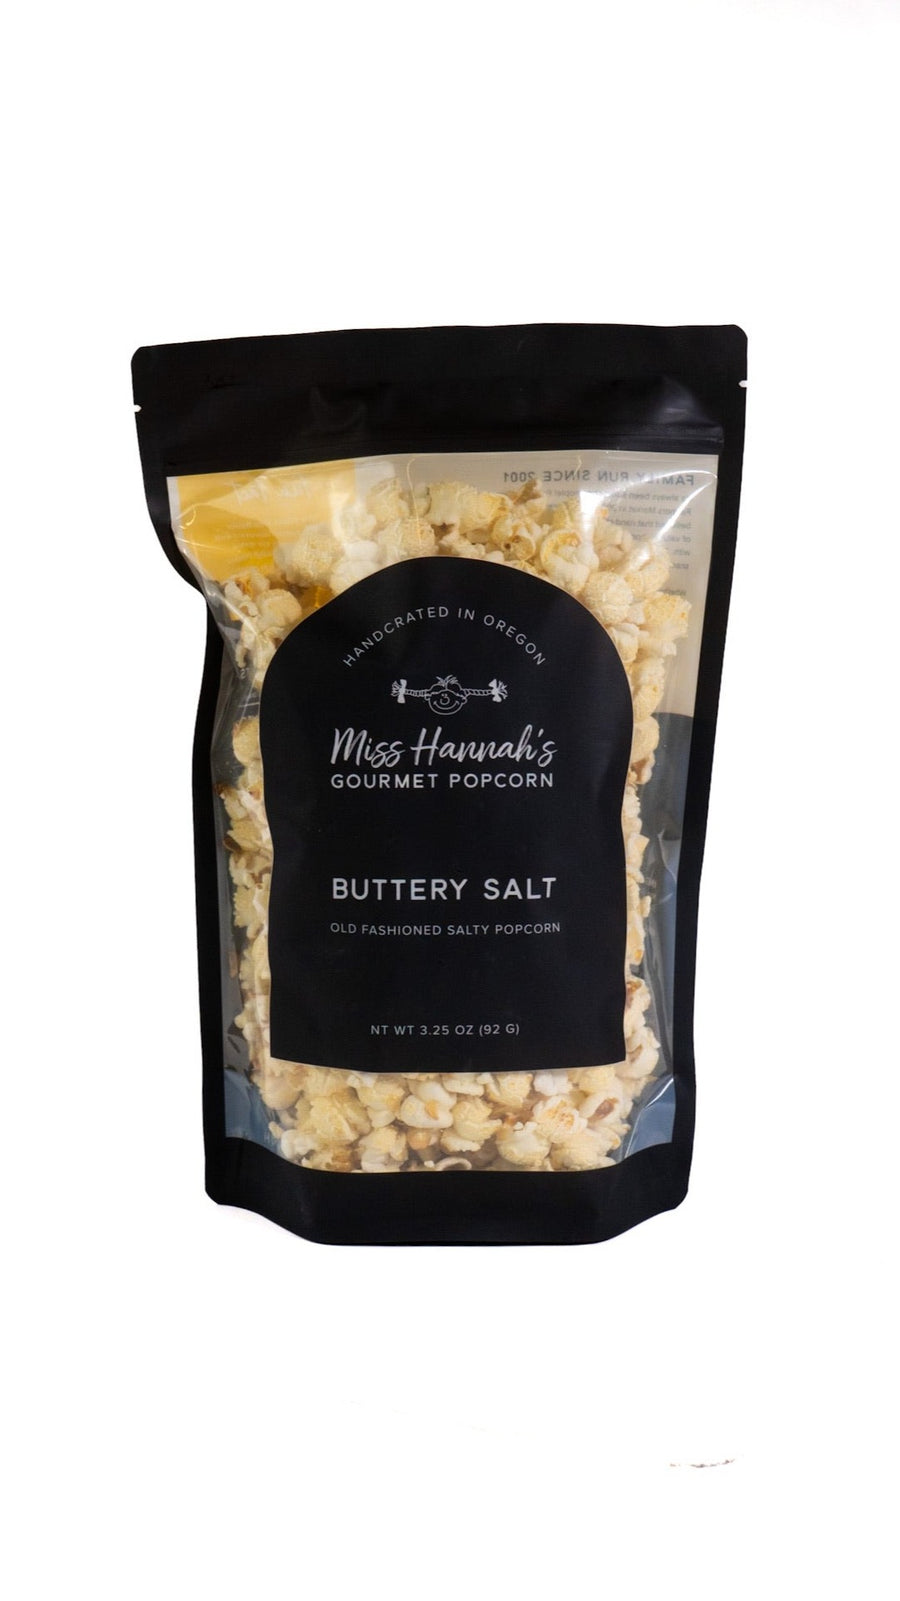 Buttery Salt by Miss Hannah's Gourmet Popcorn